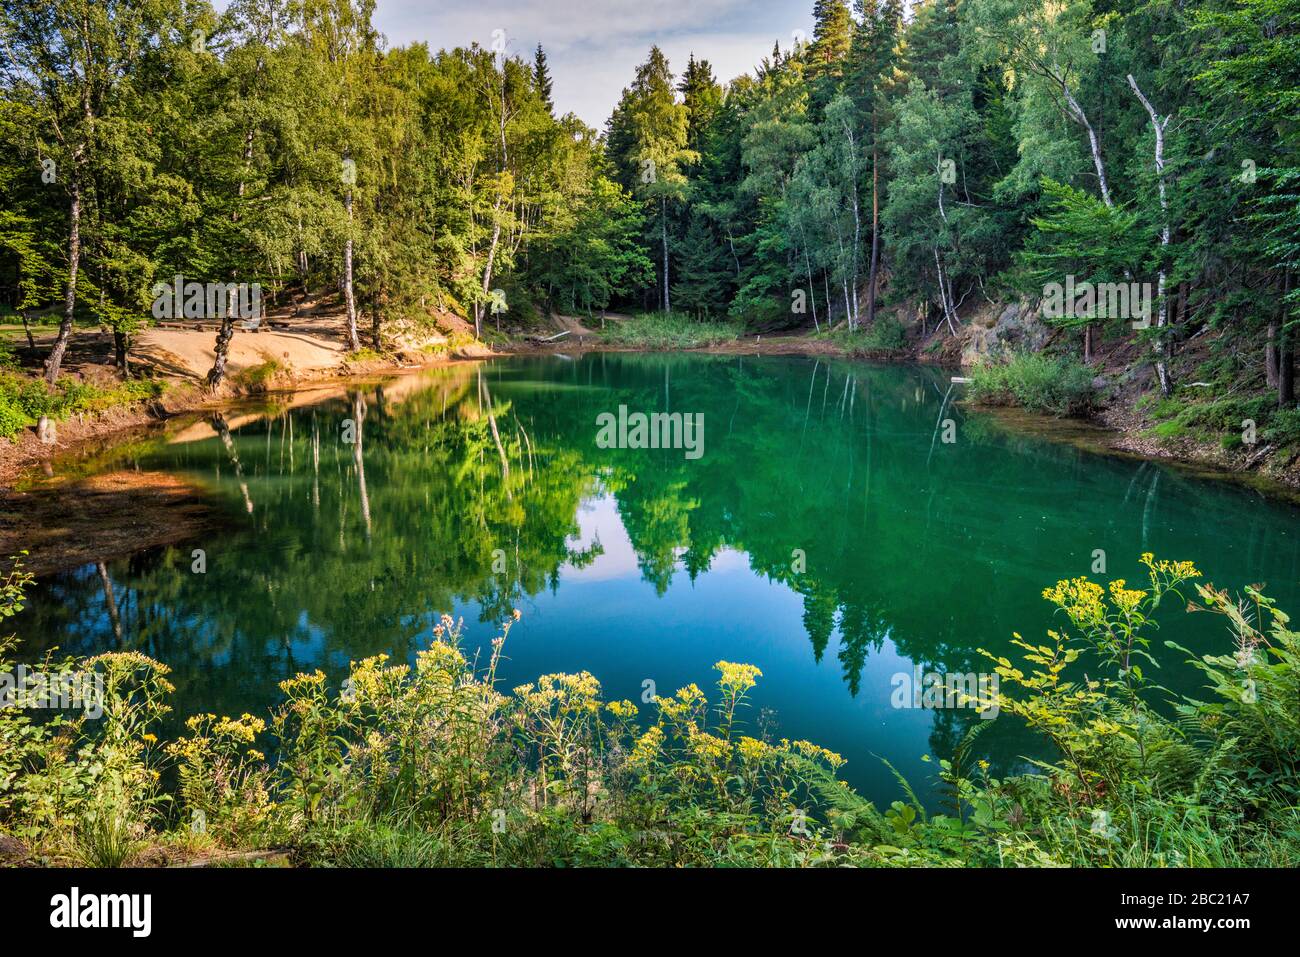 Azure Lakelet, artificial pond at Colourful Lakelets (Kolorowe Jeziorka), pyrite mining area in Rudawy Janowickie mountain range Lower Silesia, Poland Stock Photo